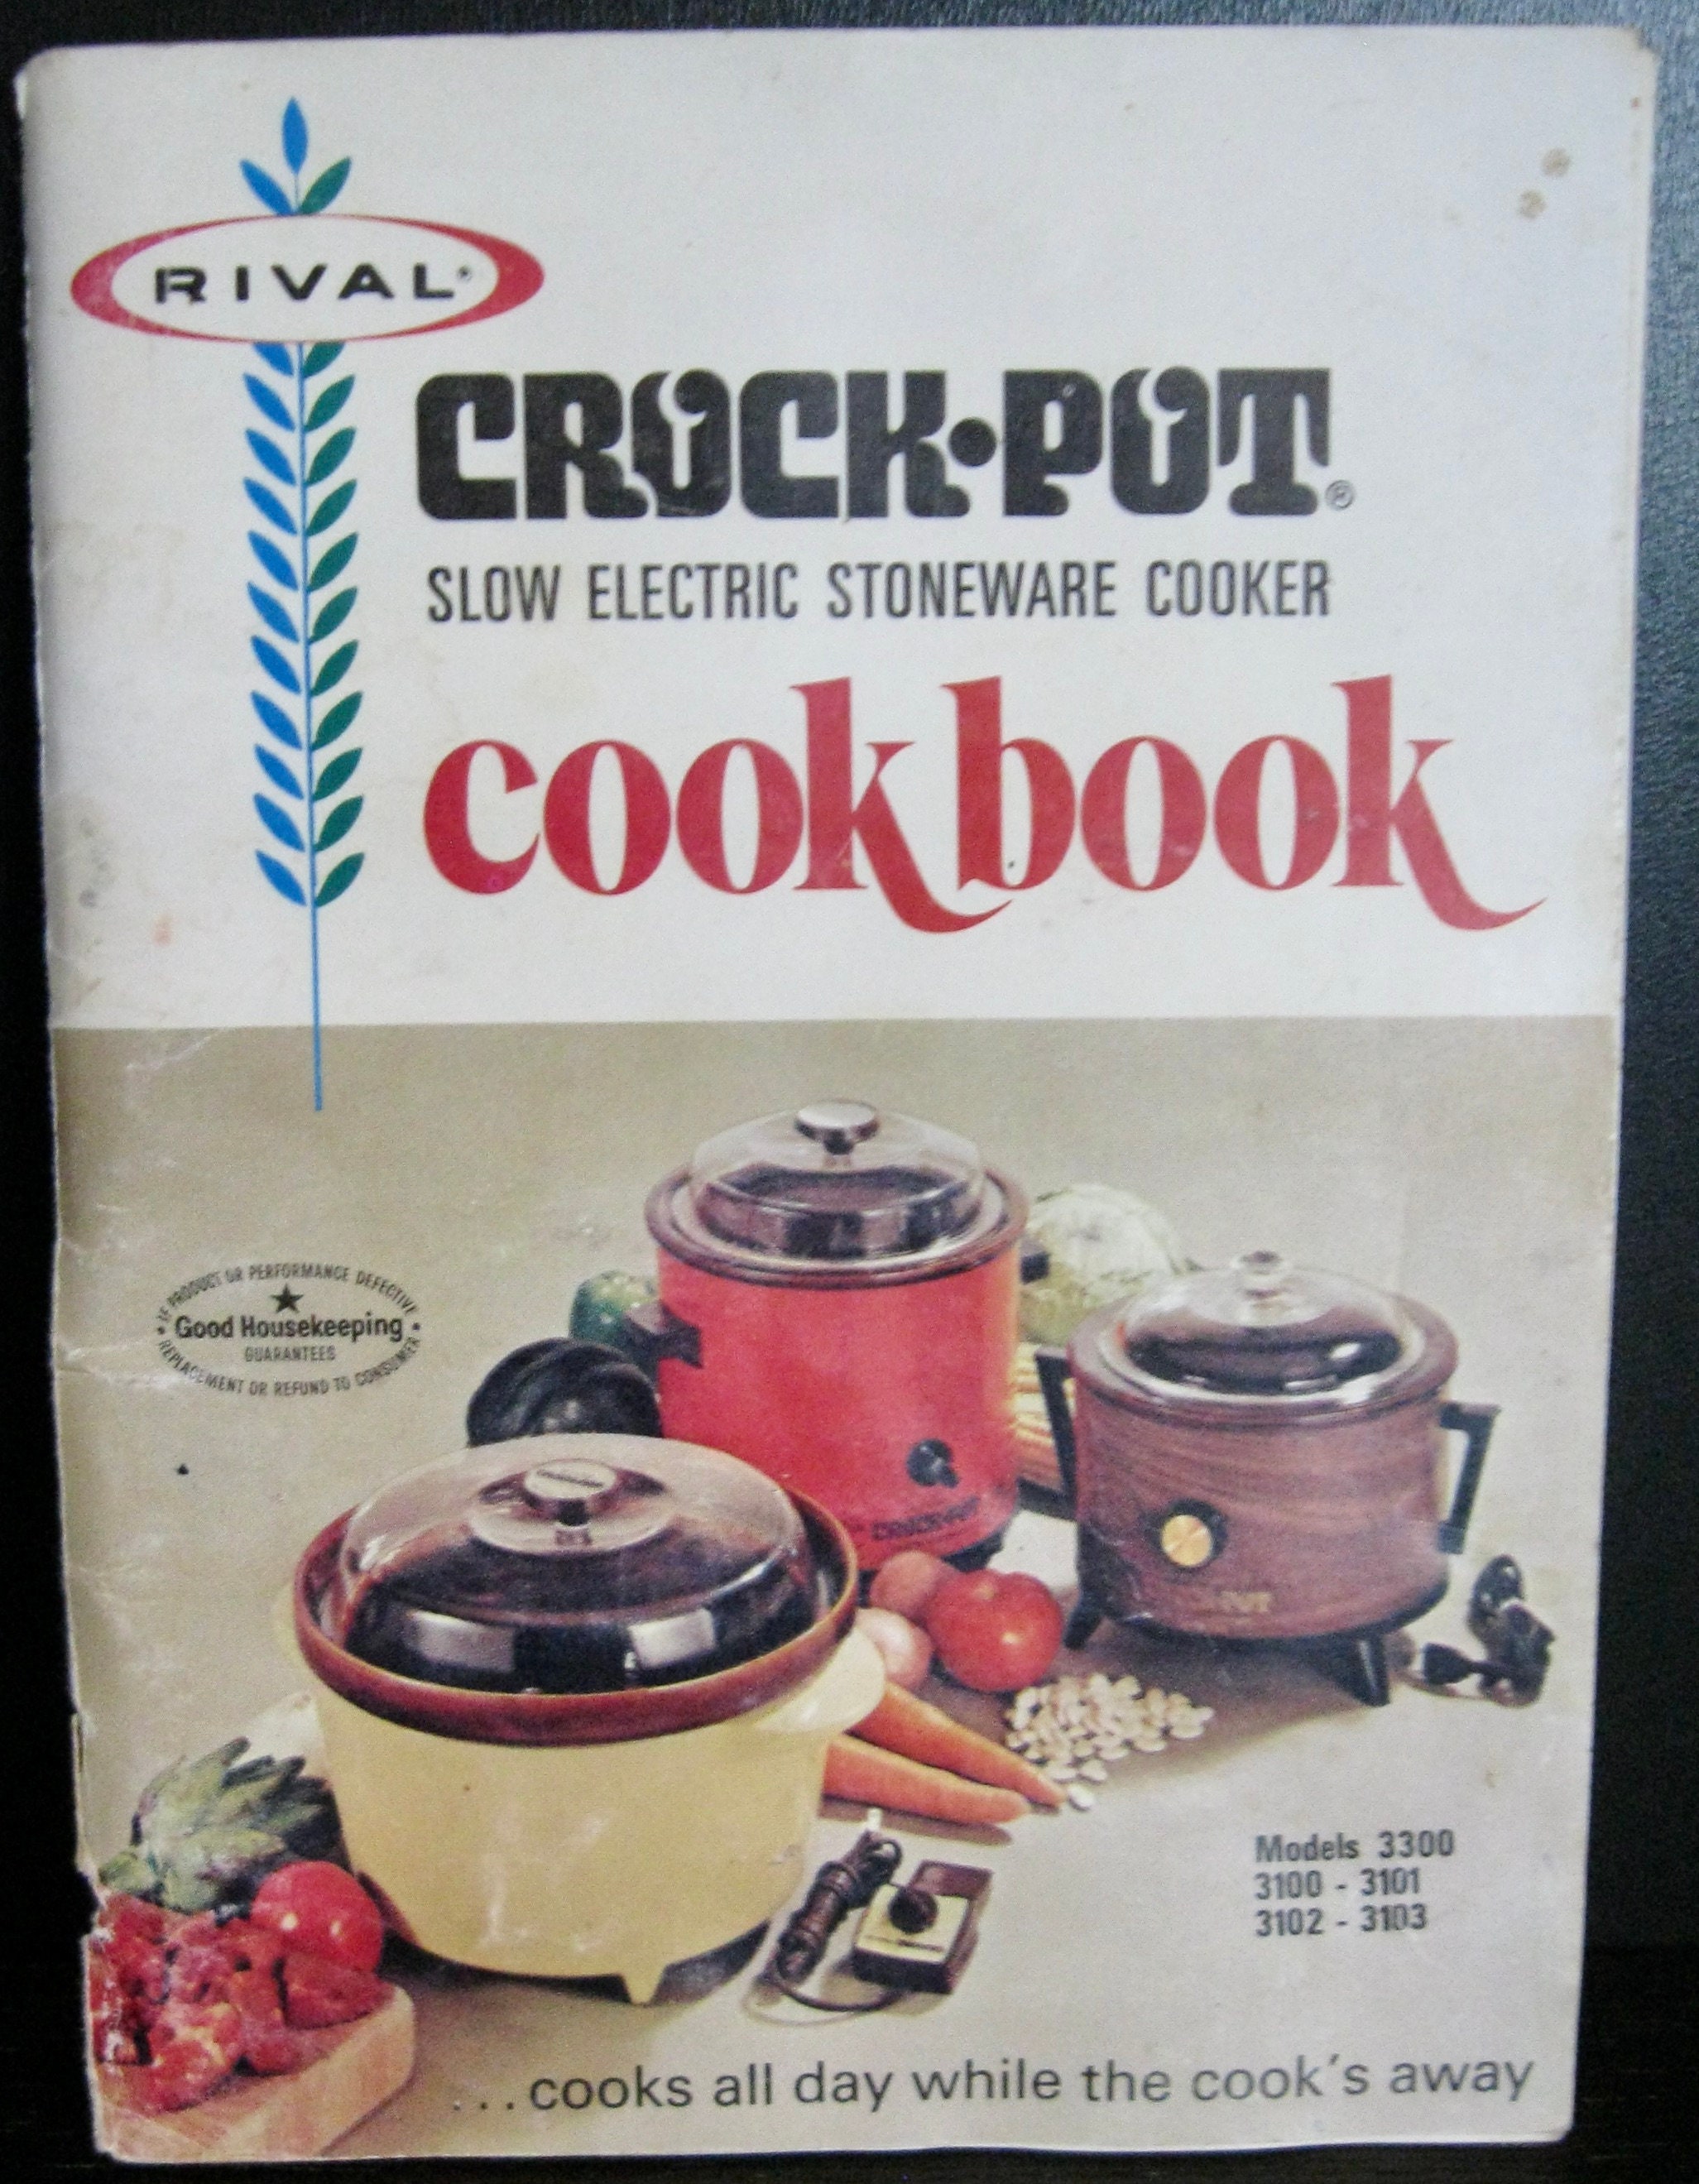  Crockpot Replacement Stoneware